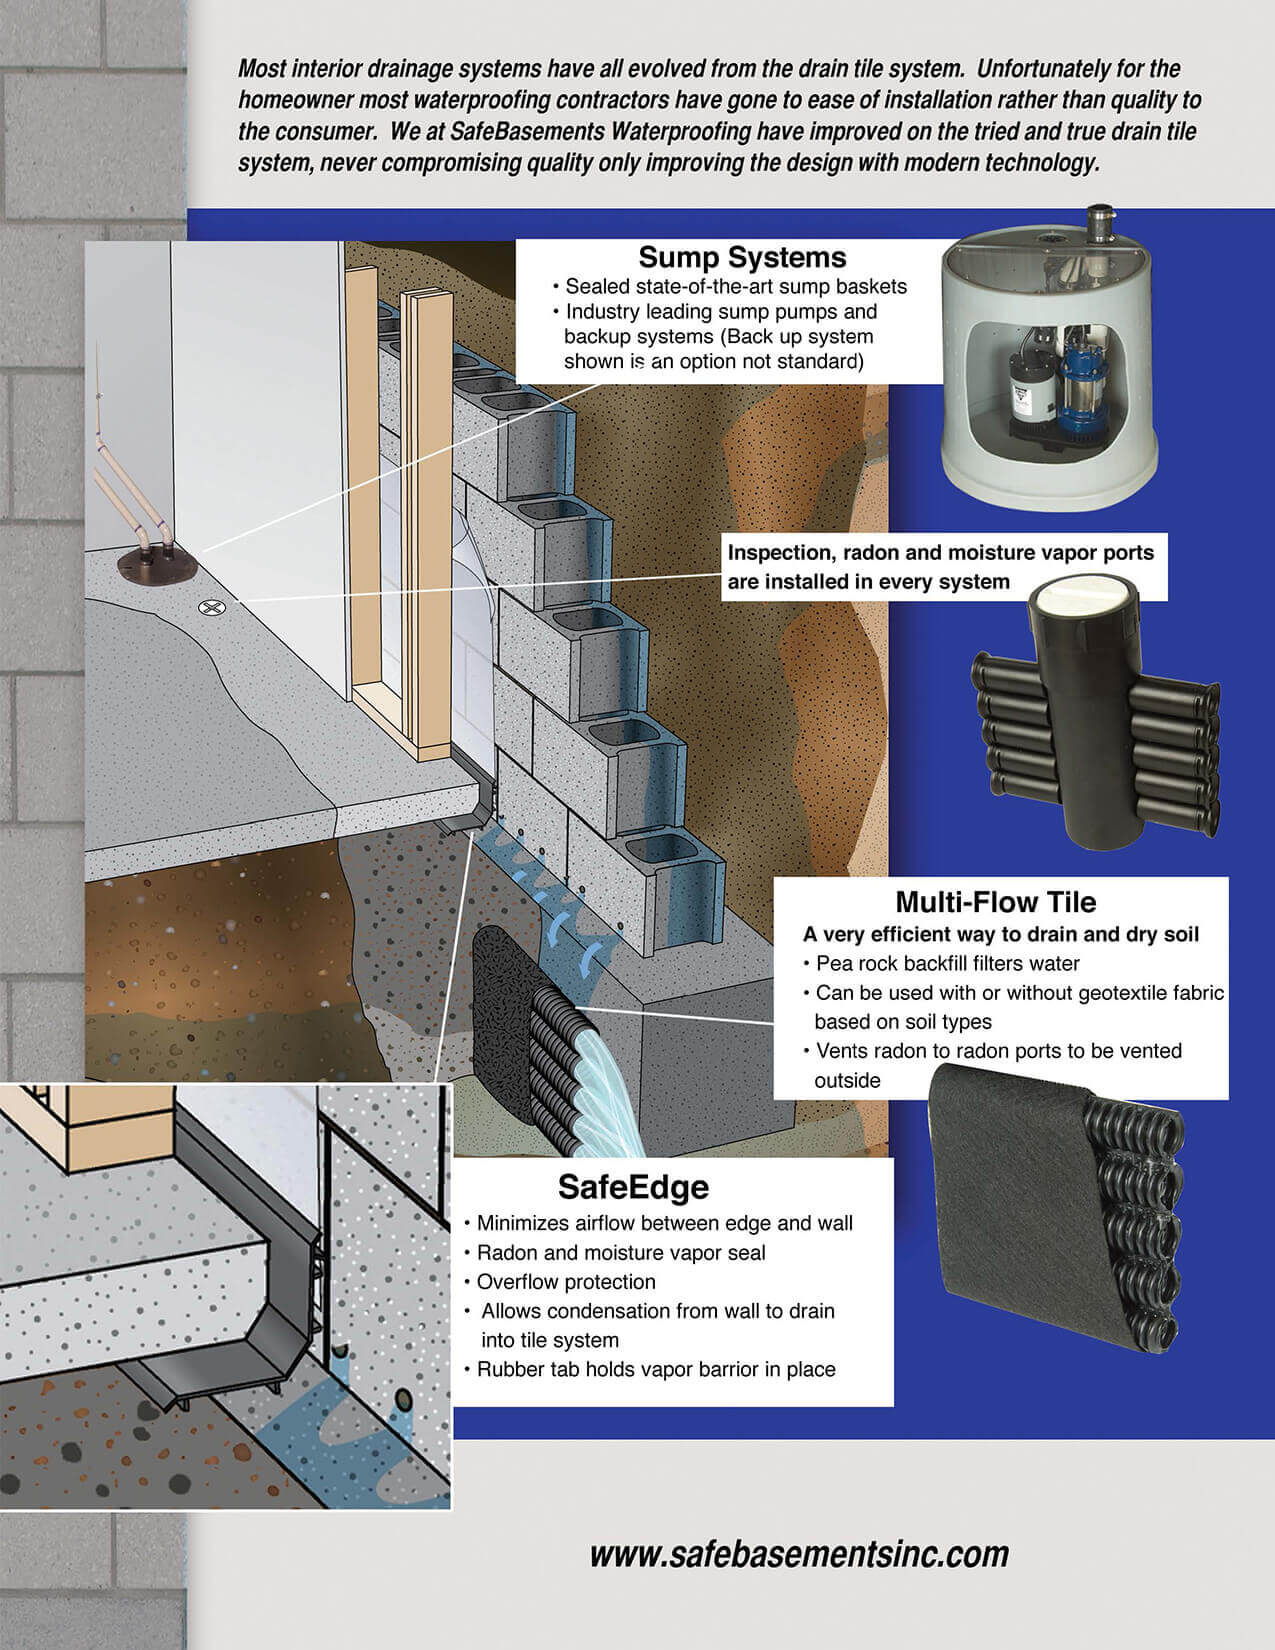 SafeEdge Waterproofing System Basement Drainage SafeBasements